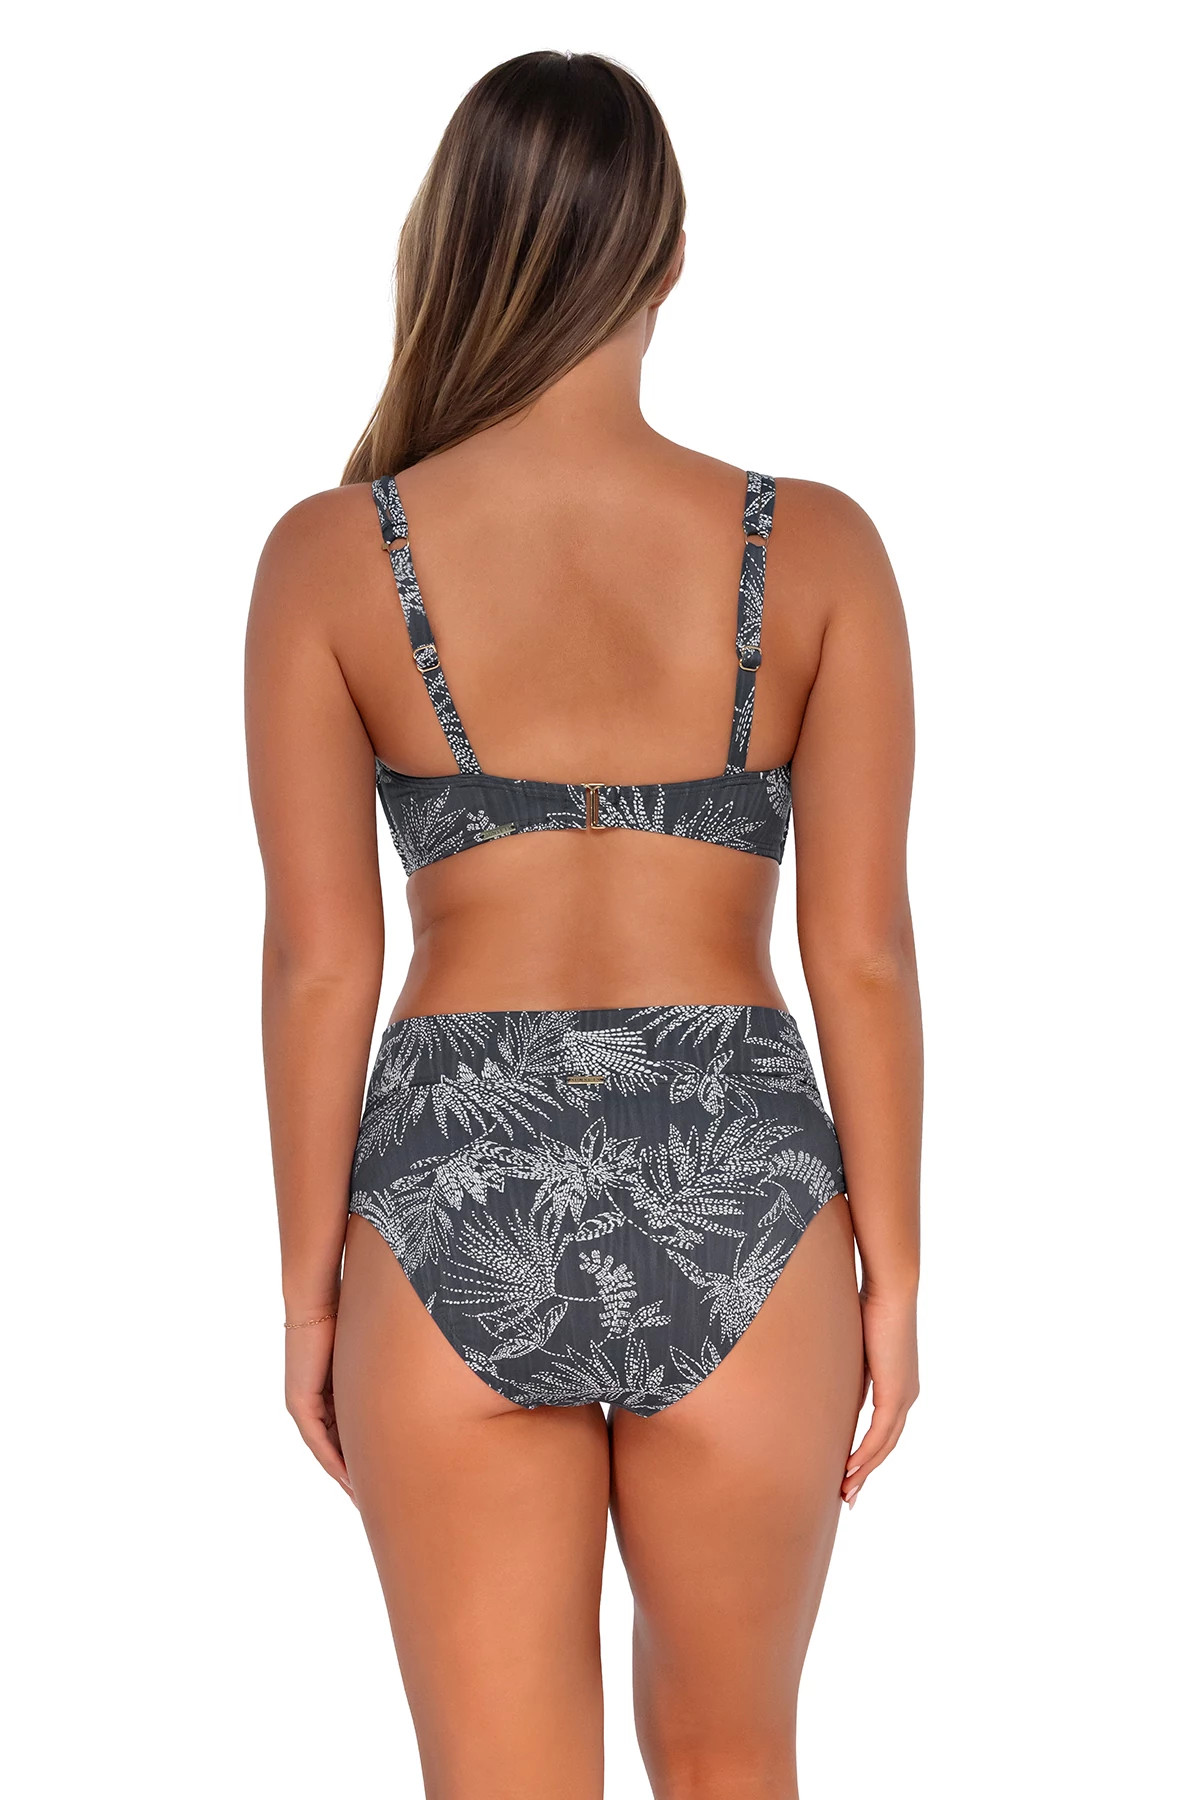 FANFARE SEAGRASS TEXTURE Taylor Underwire Bralette Bikini Top (E-H Cup) image number 2